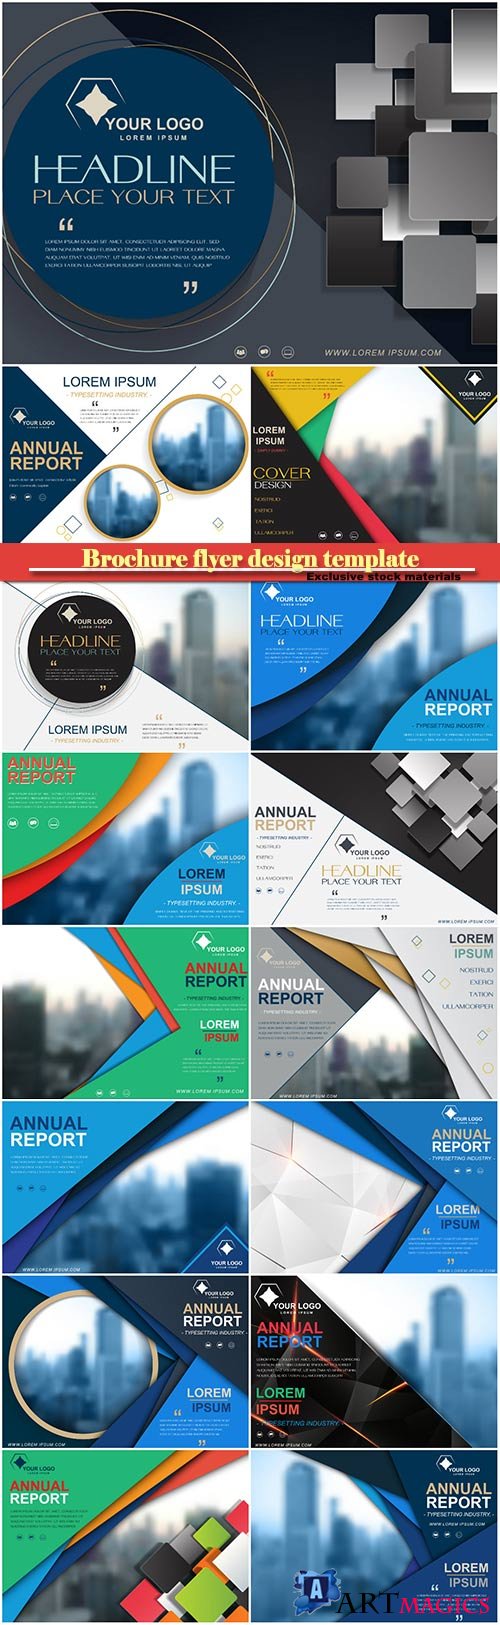 Brochure flyer design template vector, cover presentation